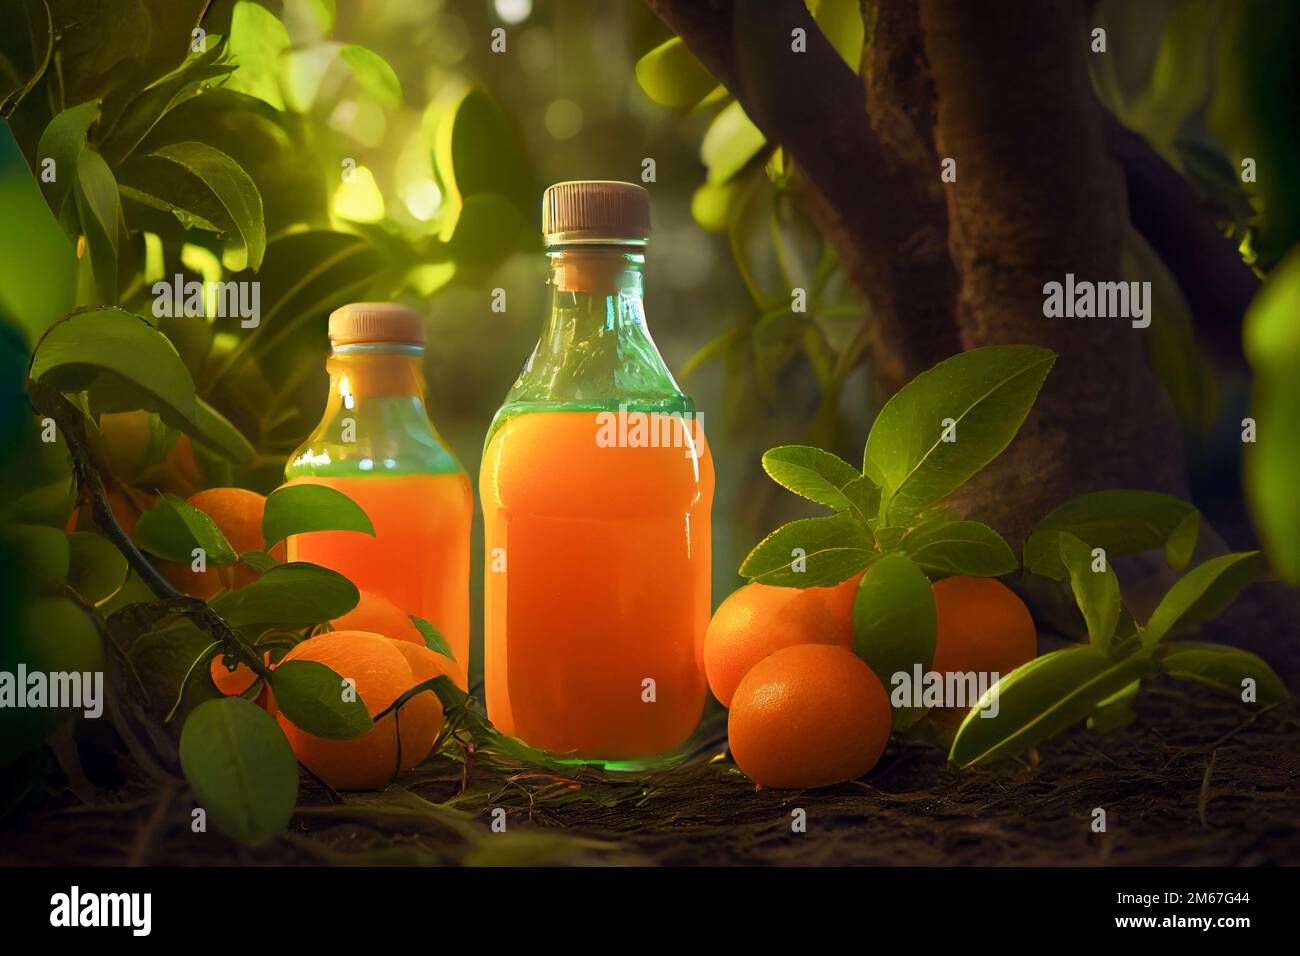 https://c8.alamy.com/comp/2M67G44/two-bottles-of-fresh-orange-juice-among-the-foliage-outdoor-2M67G44.jpg